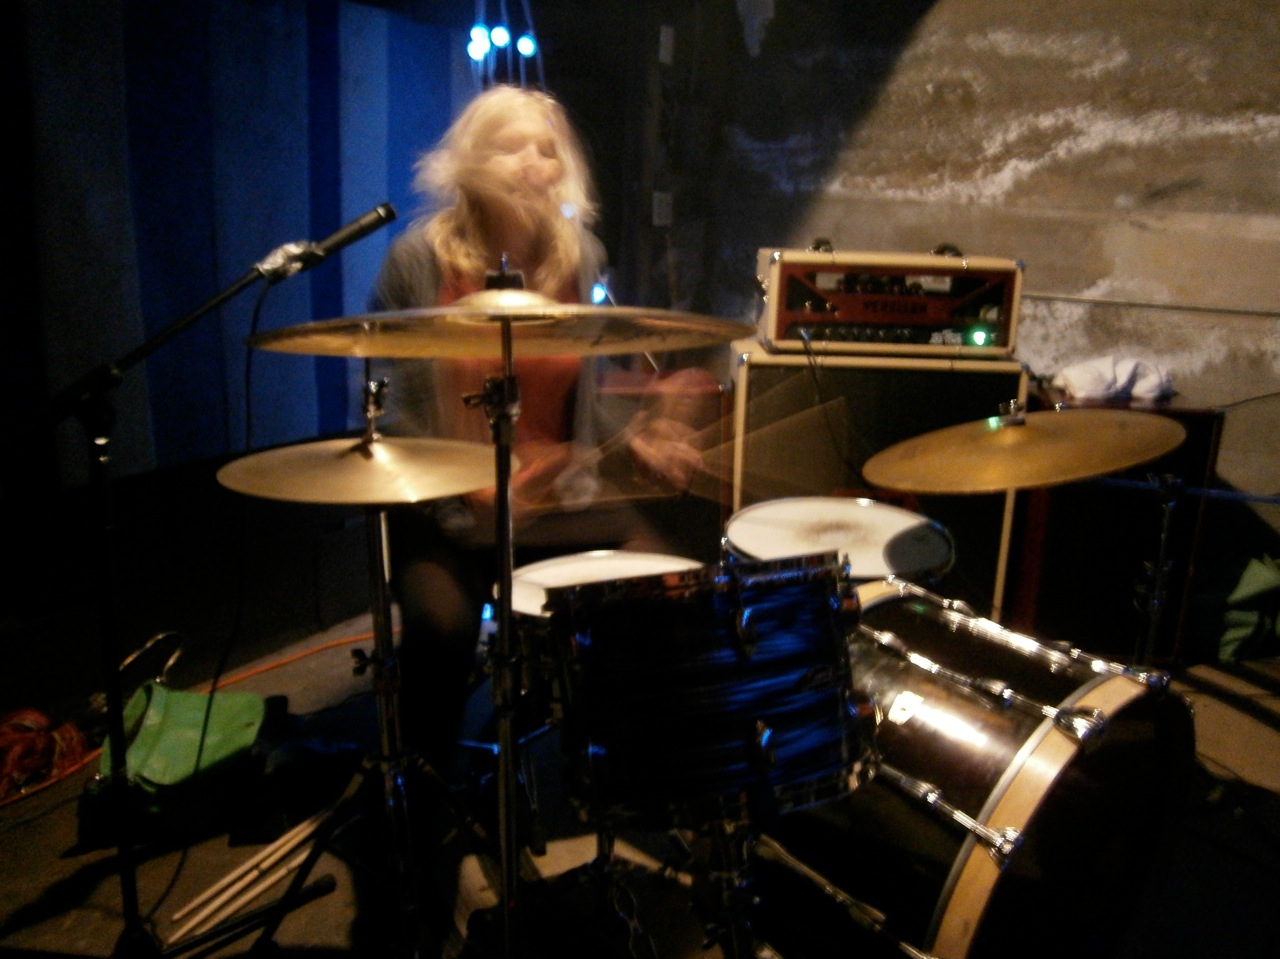 SnareMeredithKaty Tom Tom Magazine Woman Drummer on Tour